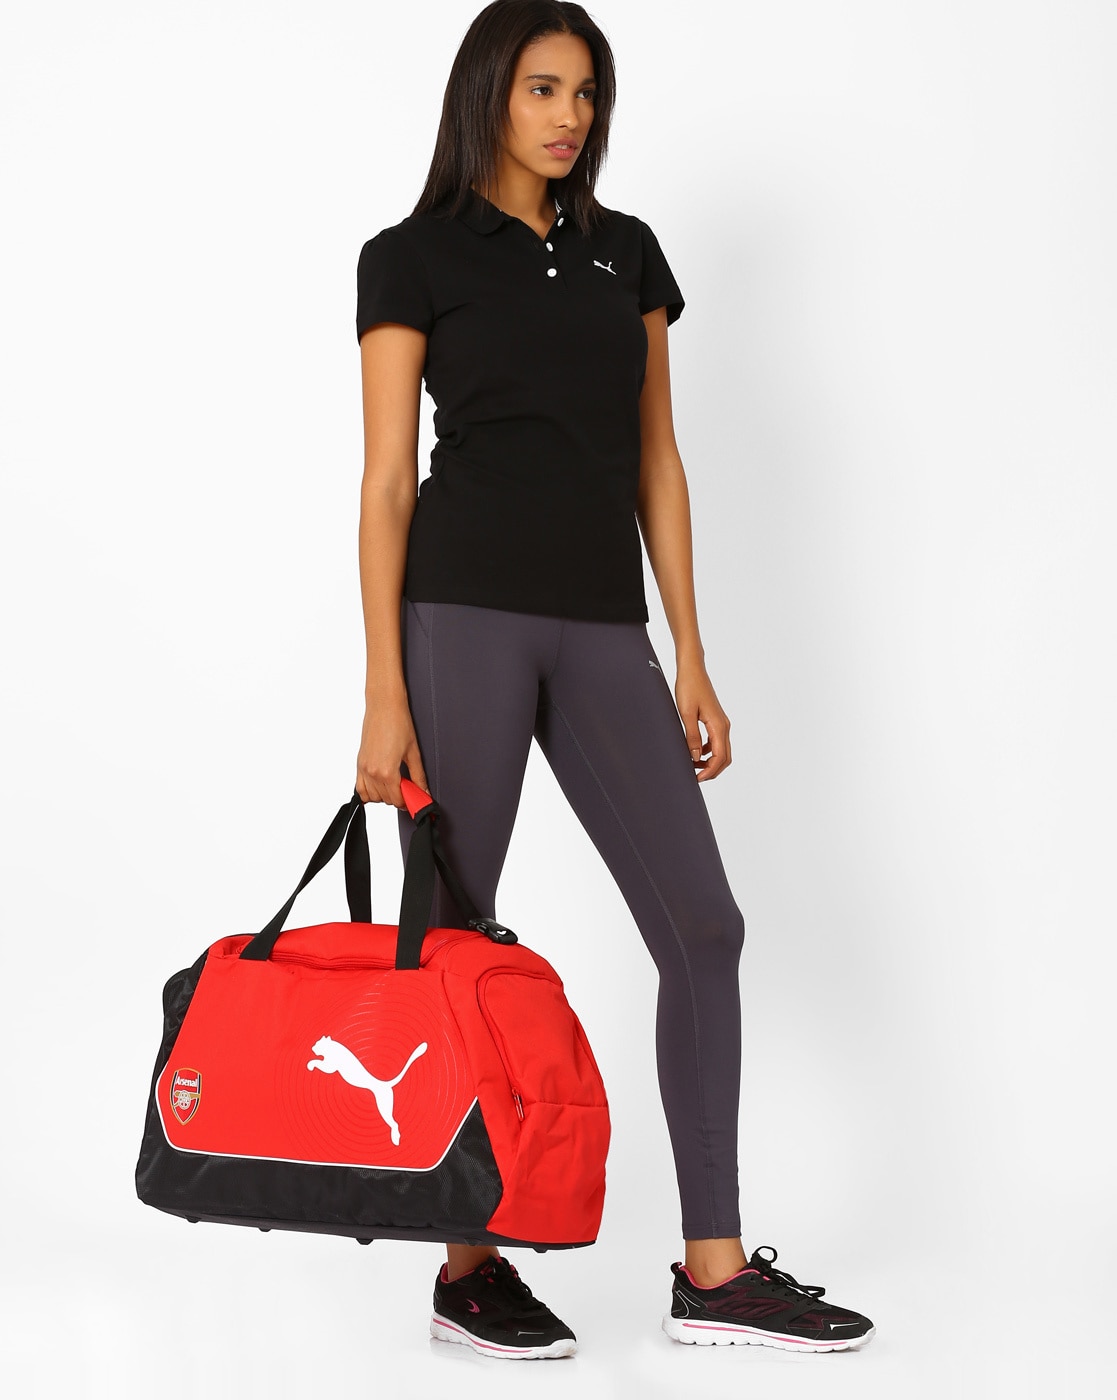 Arsenal F.C. Football Soccer Team Backpack bag Red - Sport School Travel Bag  | eBay